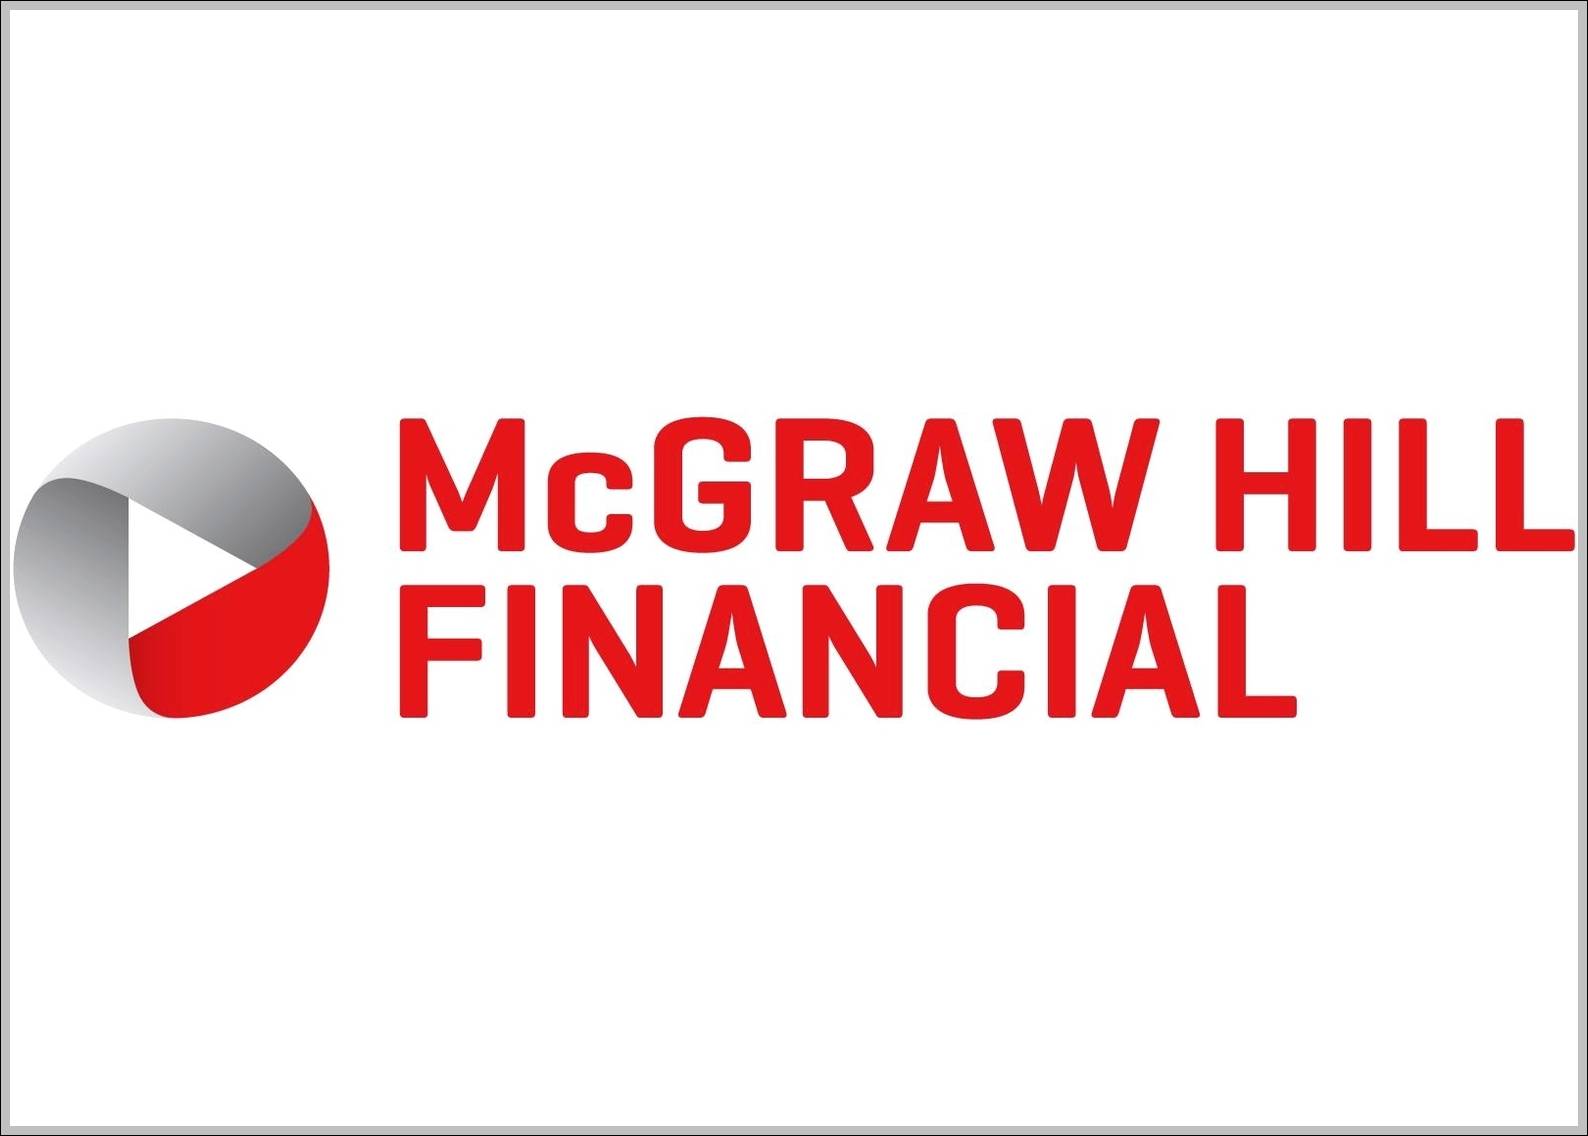 McGraw Hill logo 2013